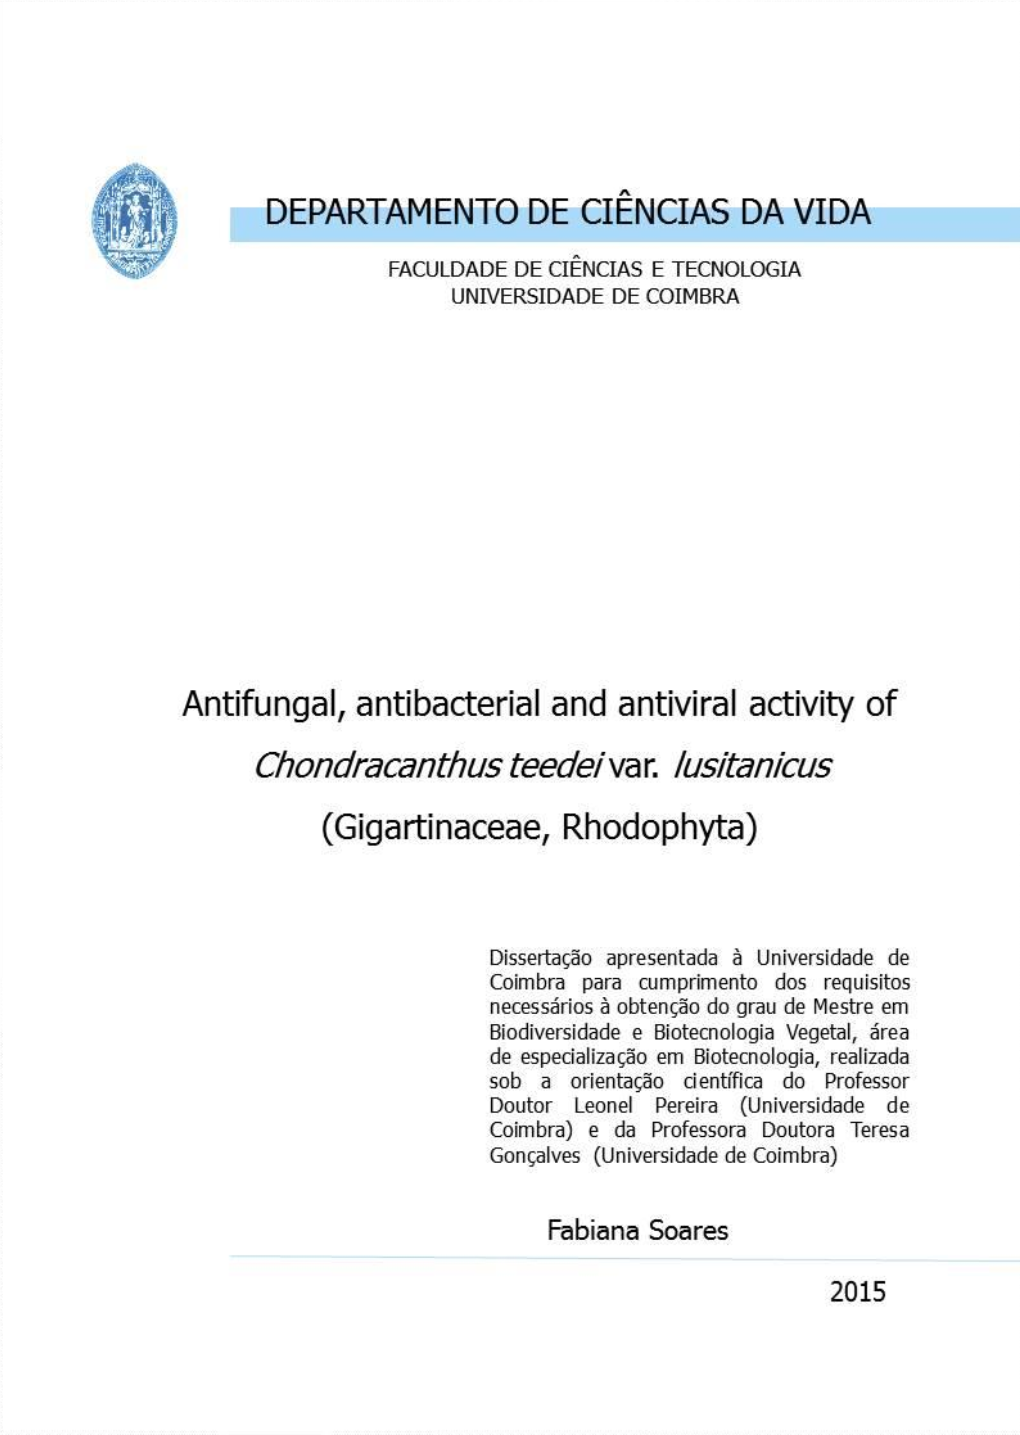 Antifungal, Antibacterial and Antiviral Activity of Chondracanthus Teedei Var. Lusitanicus (Gigartinaceae, Rhodophyta).Pdf